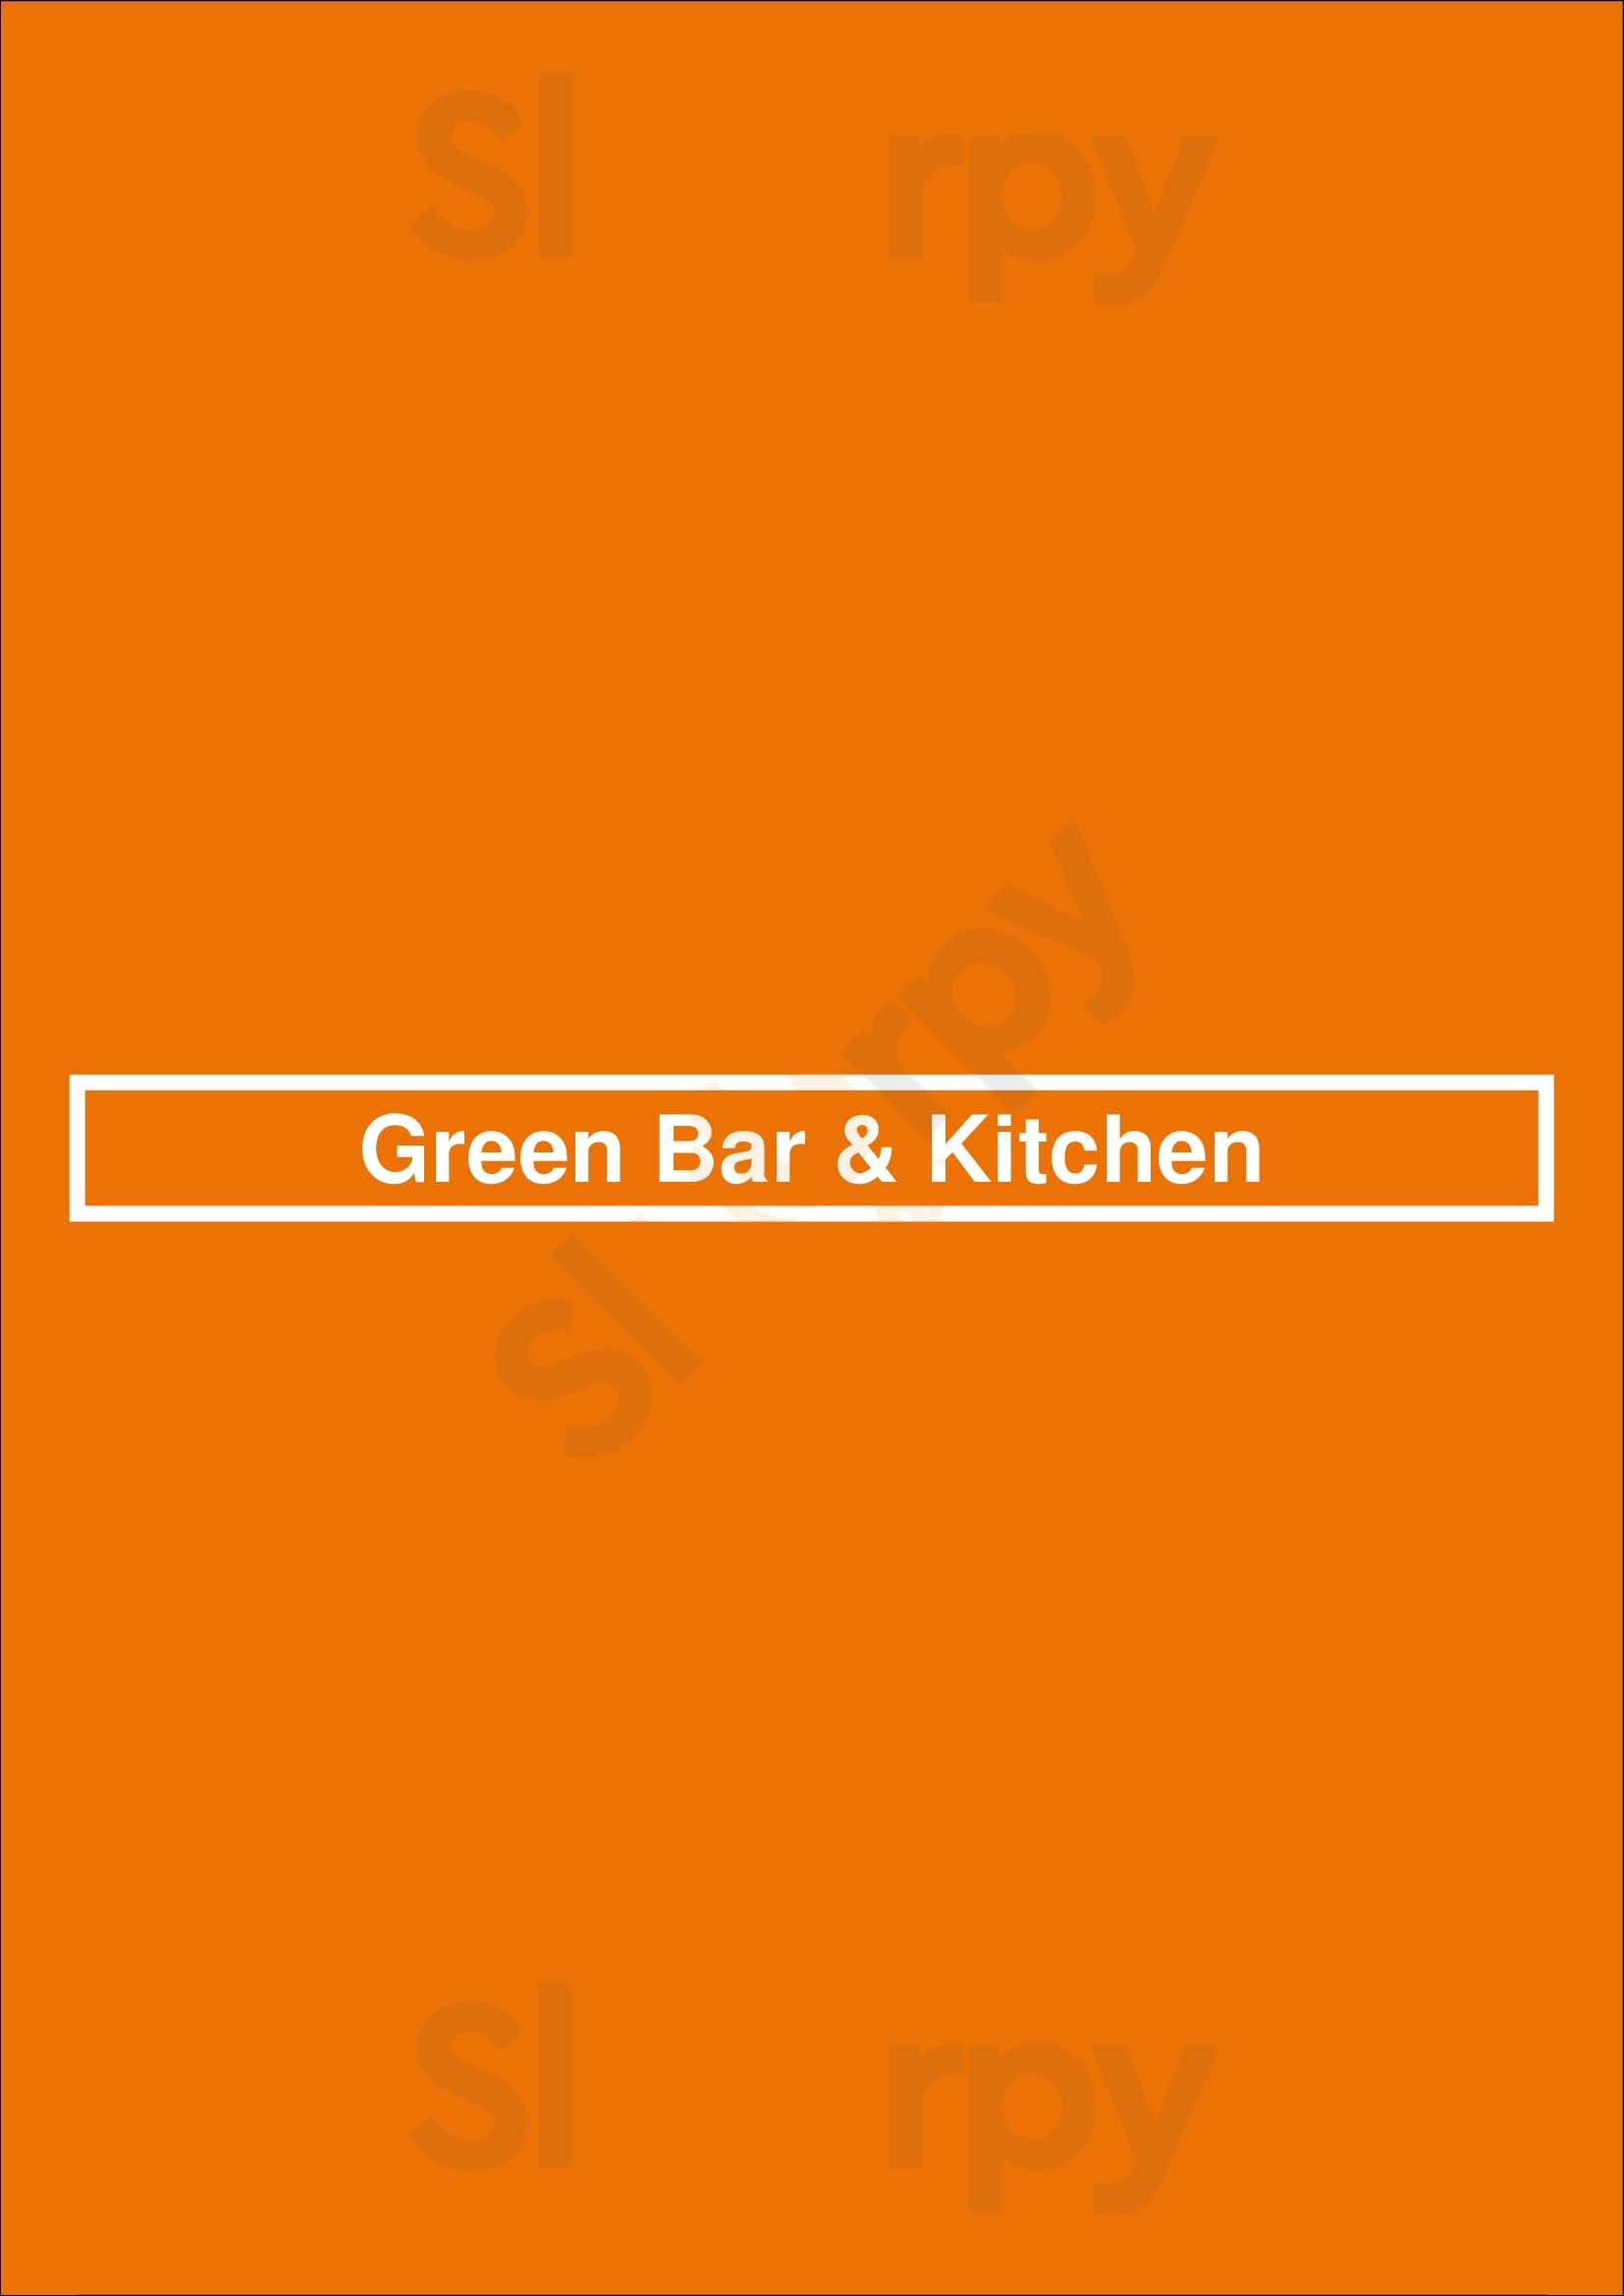 Green Bar & Kitchen Fort Lauderdale Menu - 1